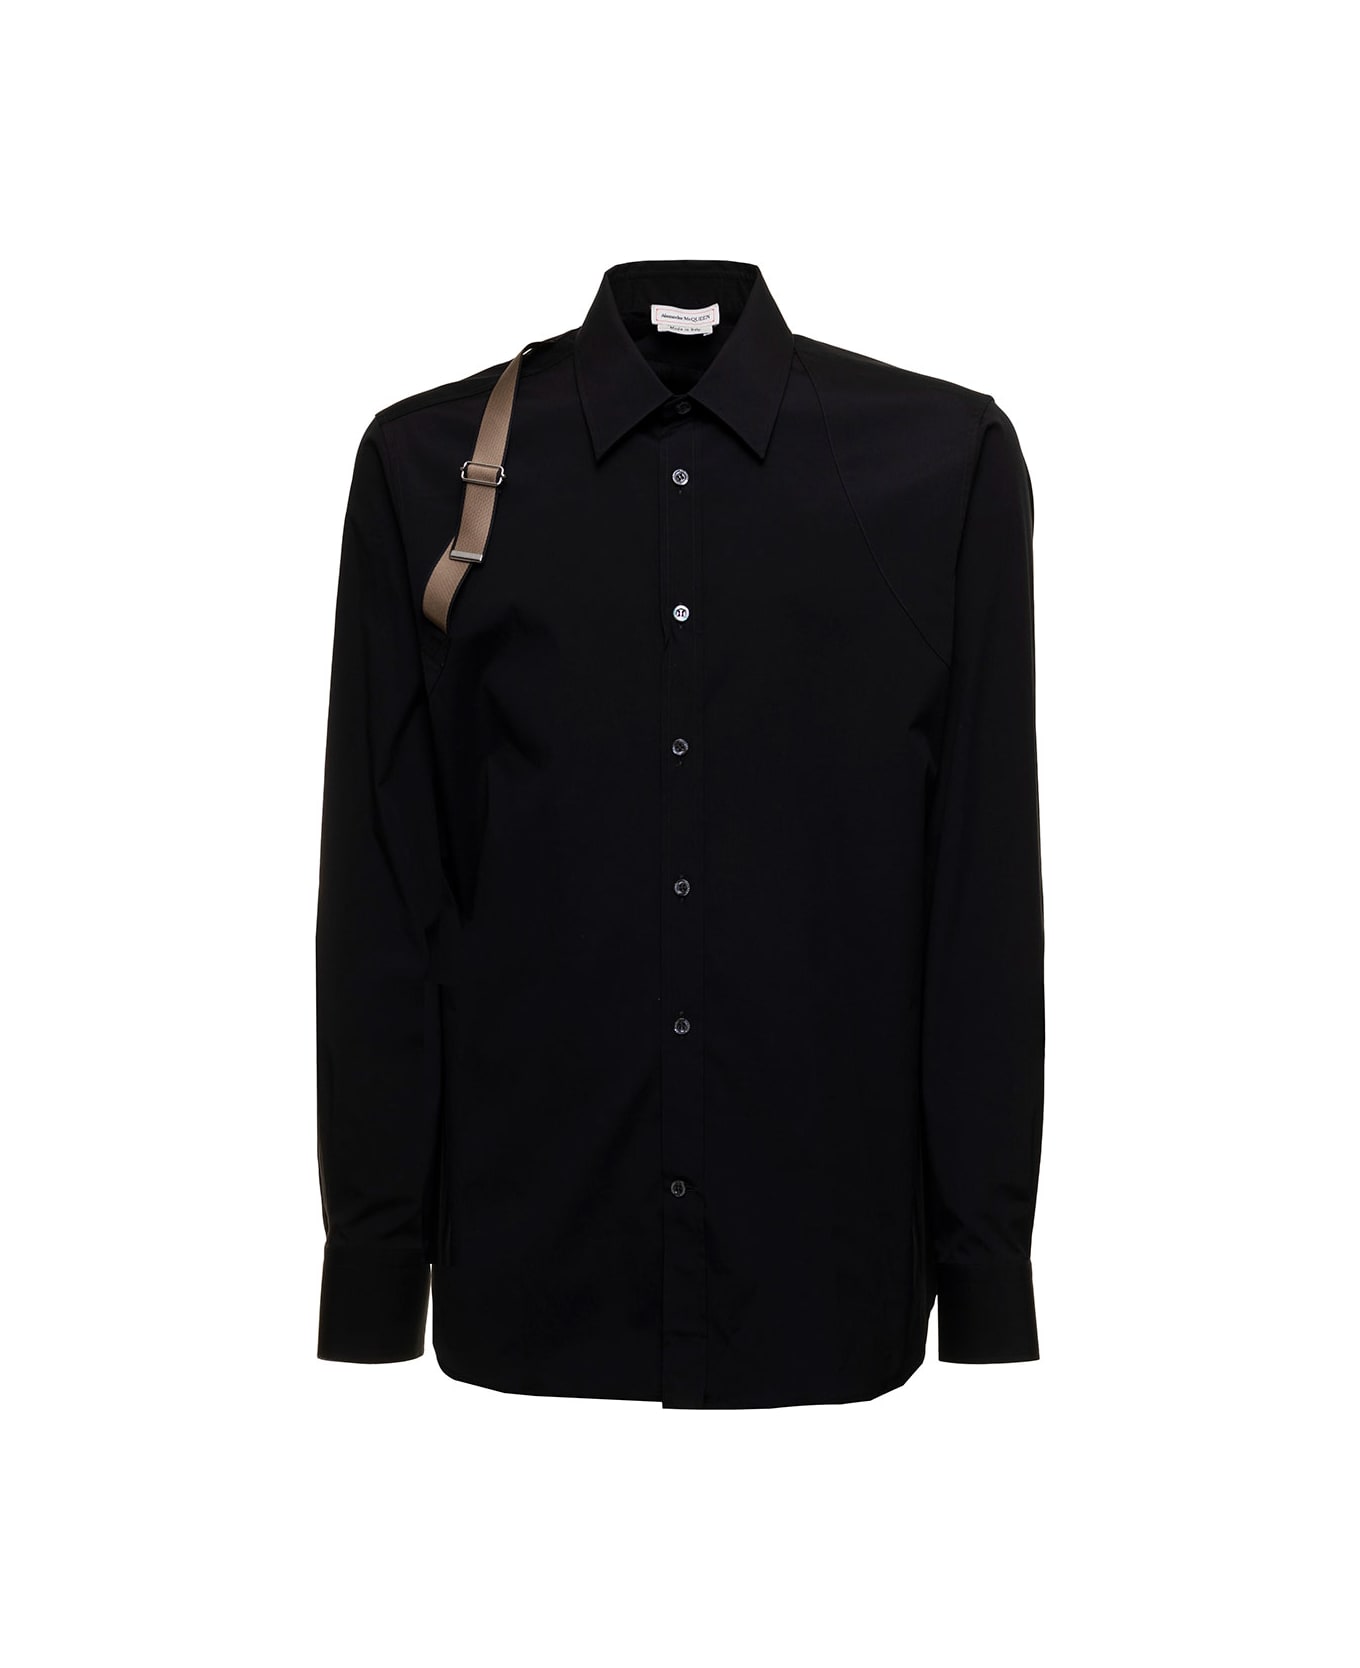 Alexander McQueen Man's Signature Harness  Black Cotton  Shirt - Black